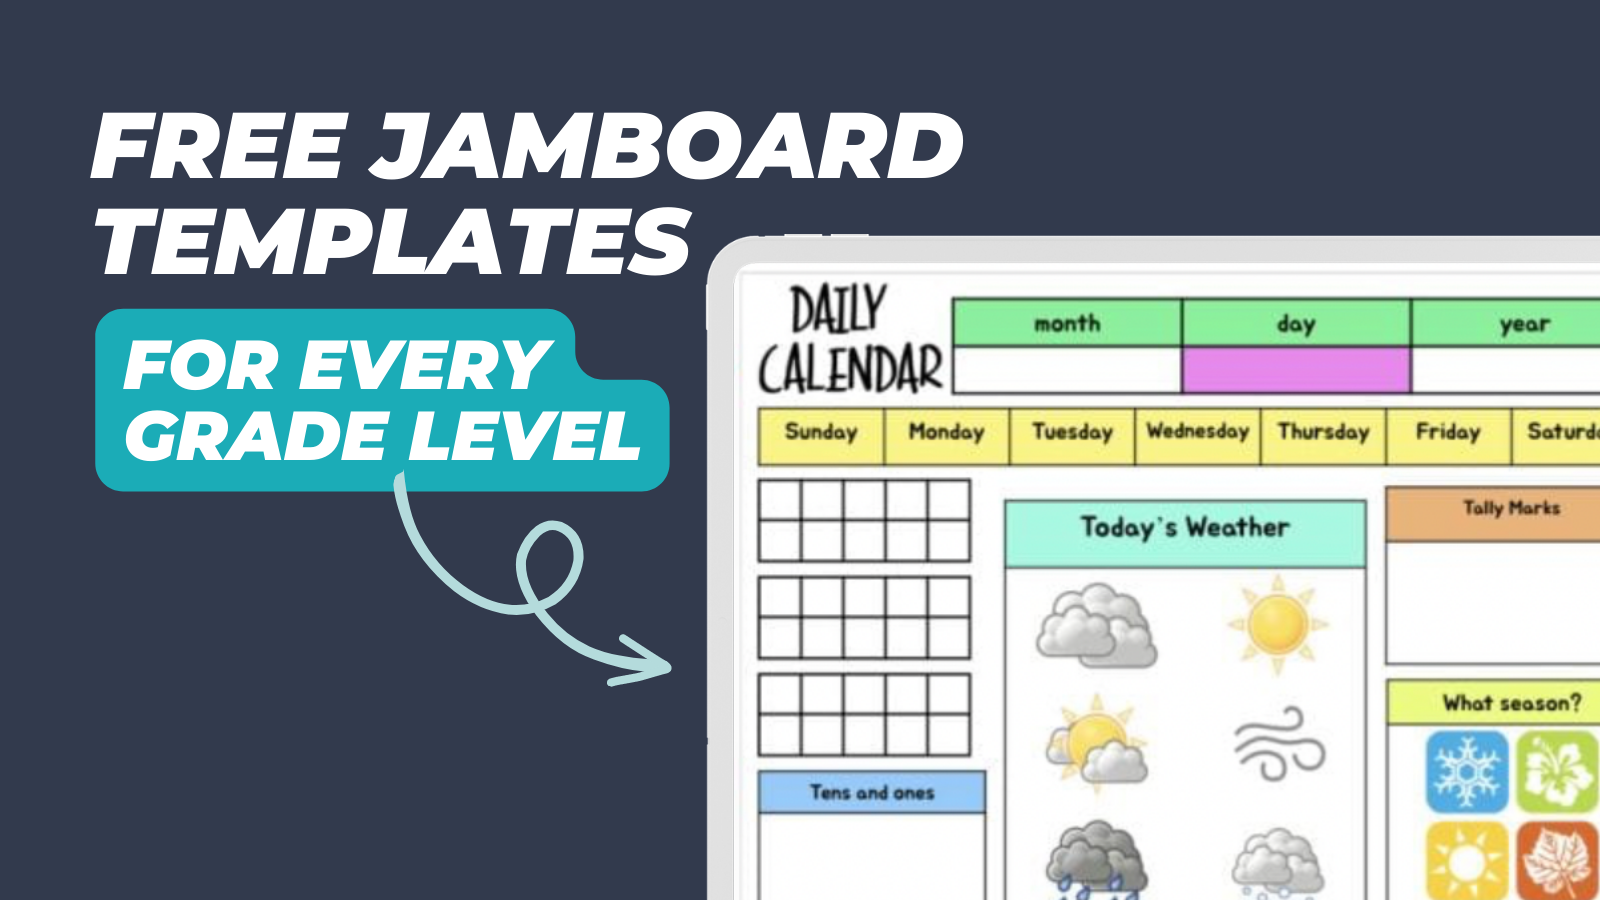 pastel zakdoek modus 25 Free Jamboard Templates and Ideas for Teachers